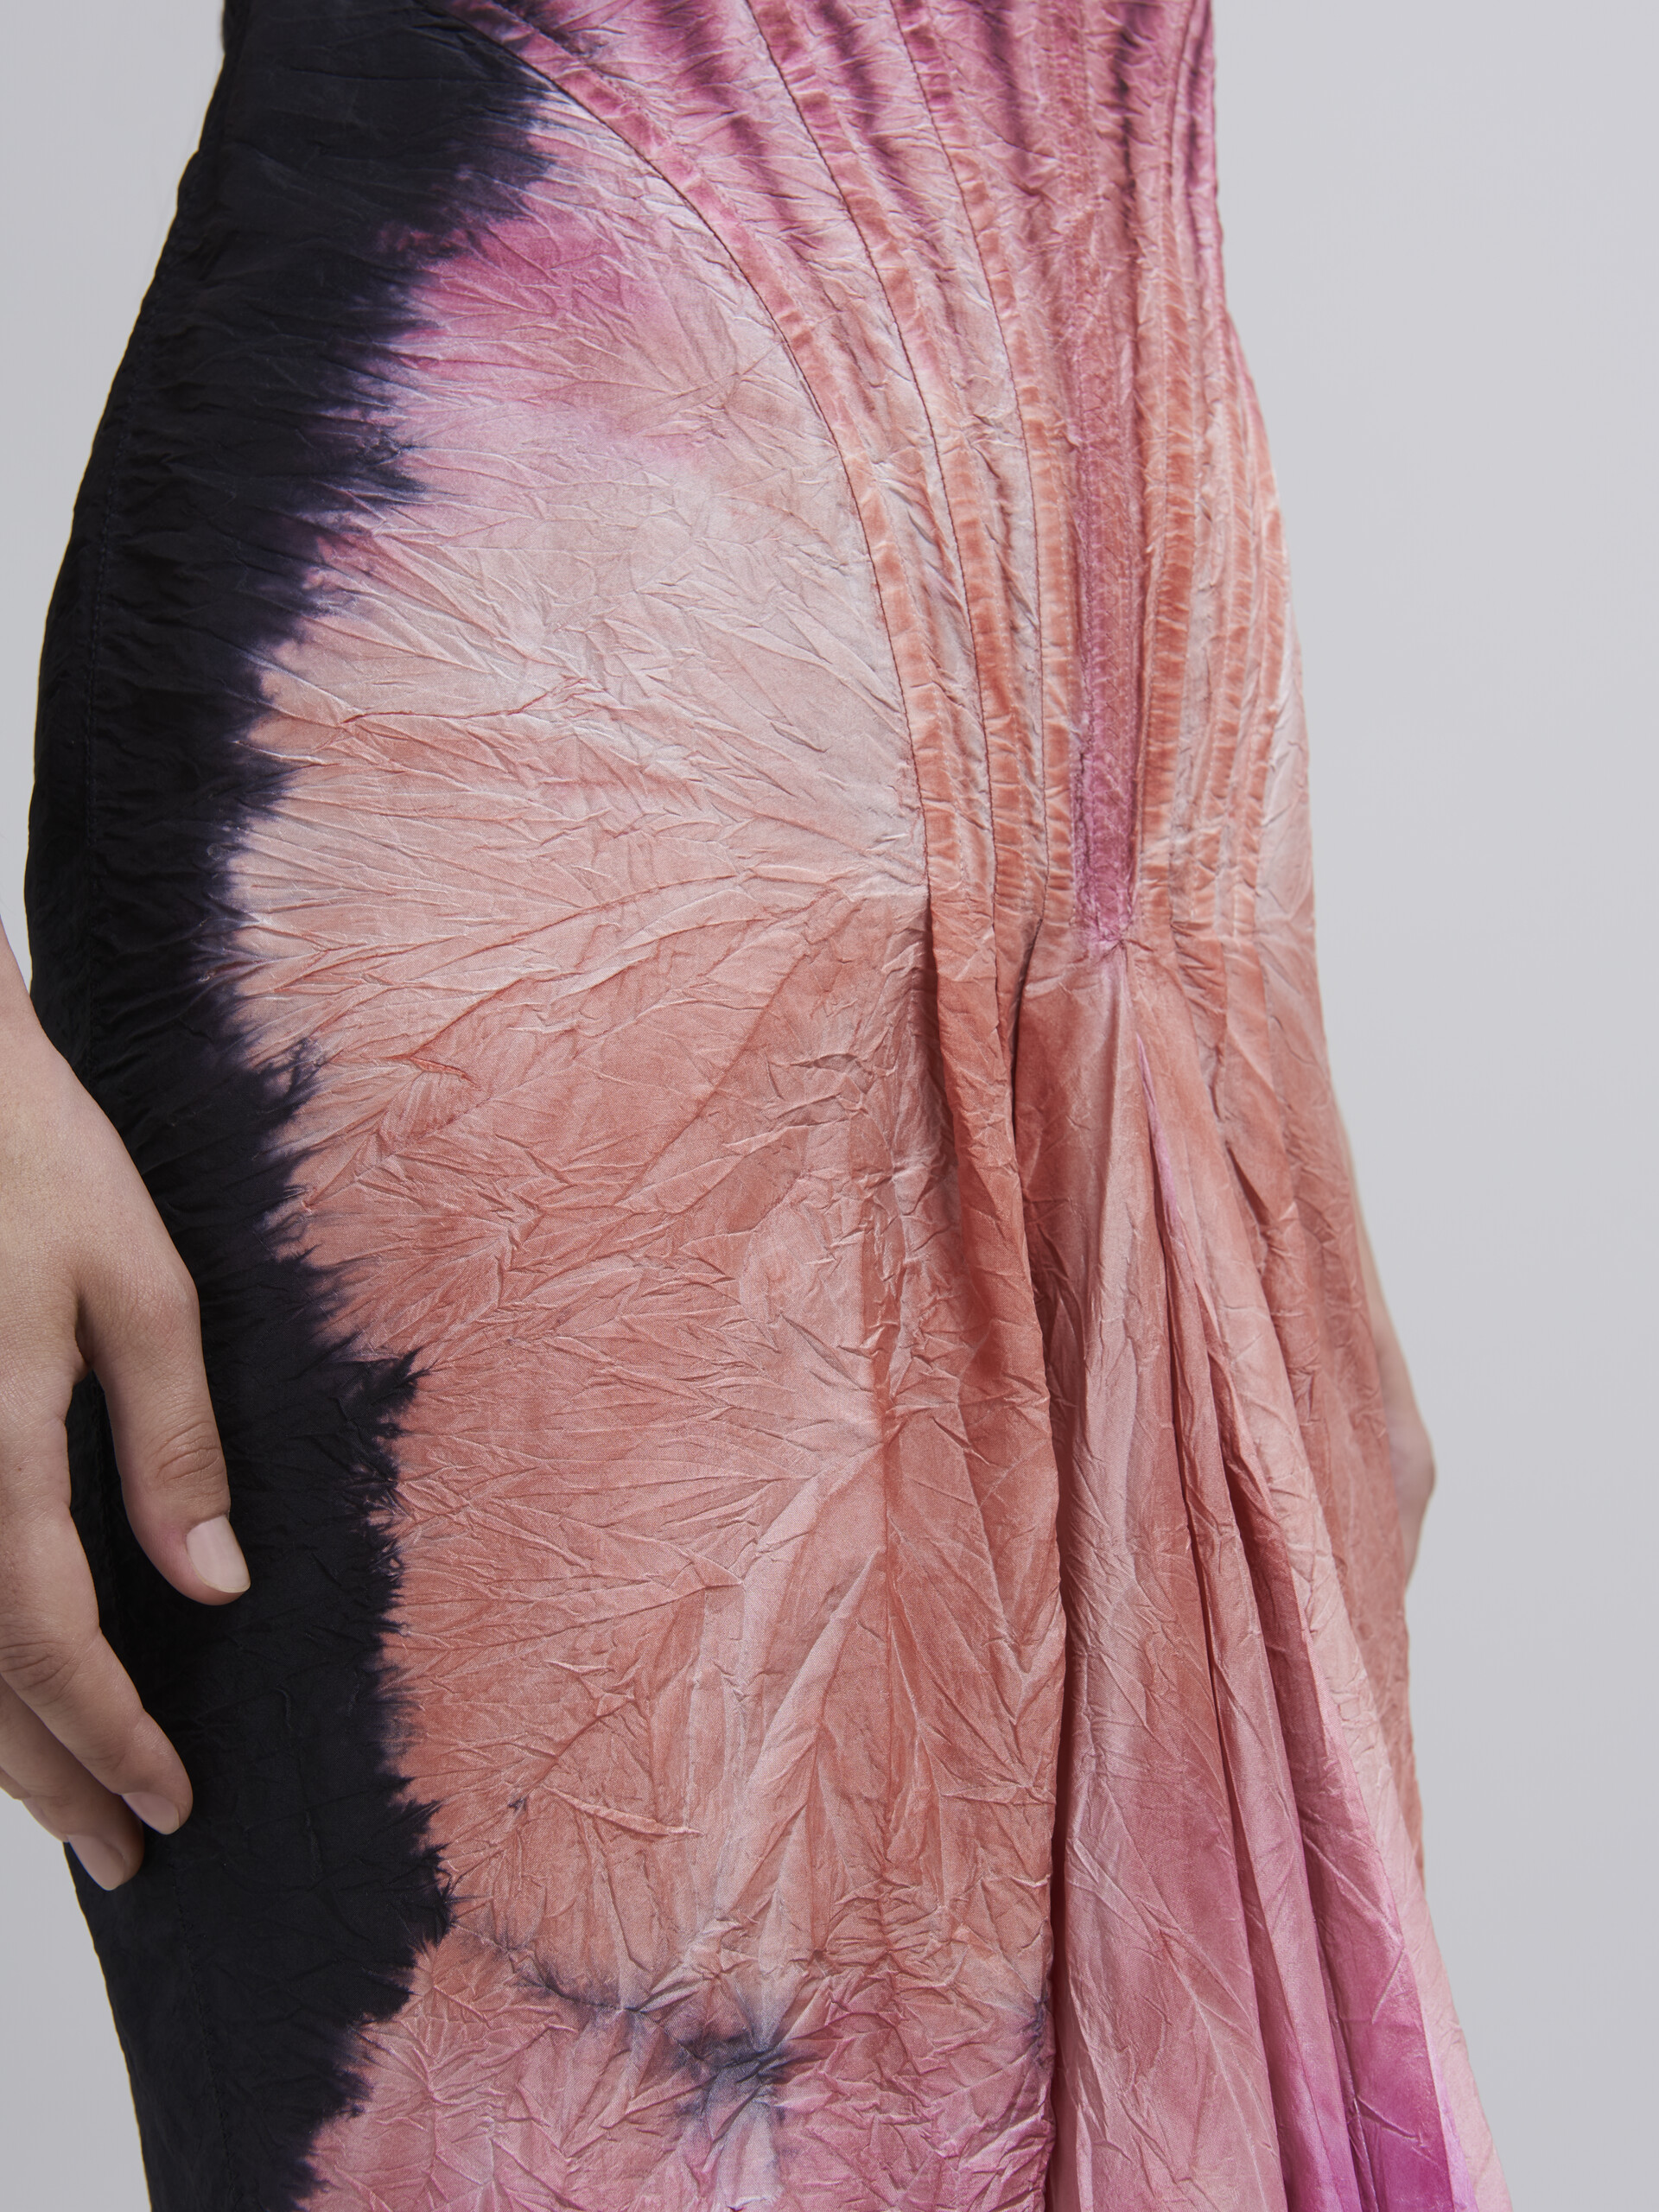 Vestido de tafetán de seda con teñido arco iris - Vestidos - Image 5